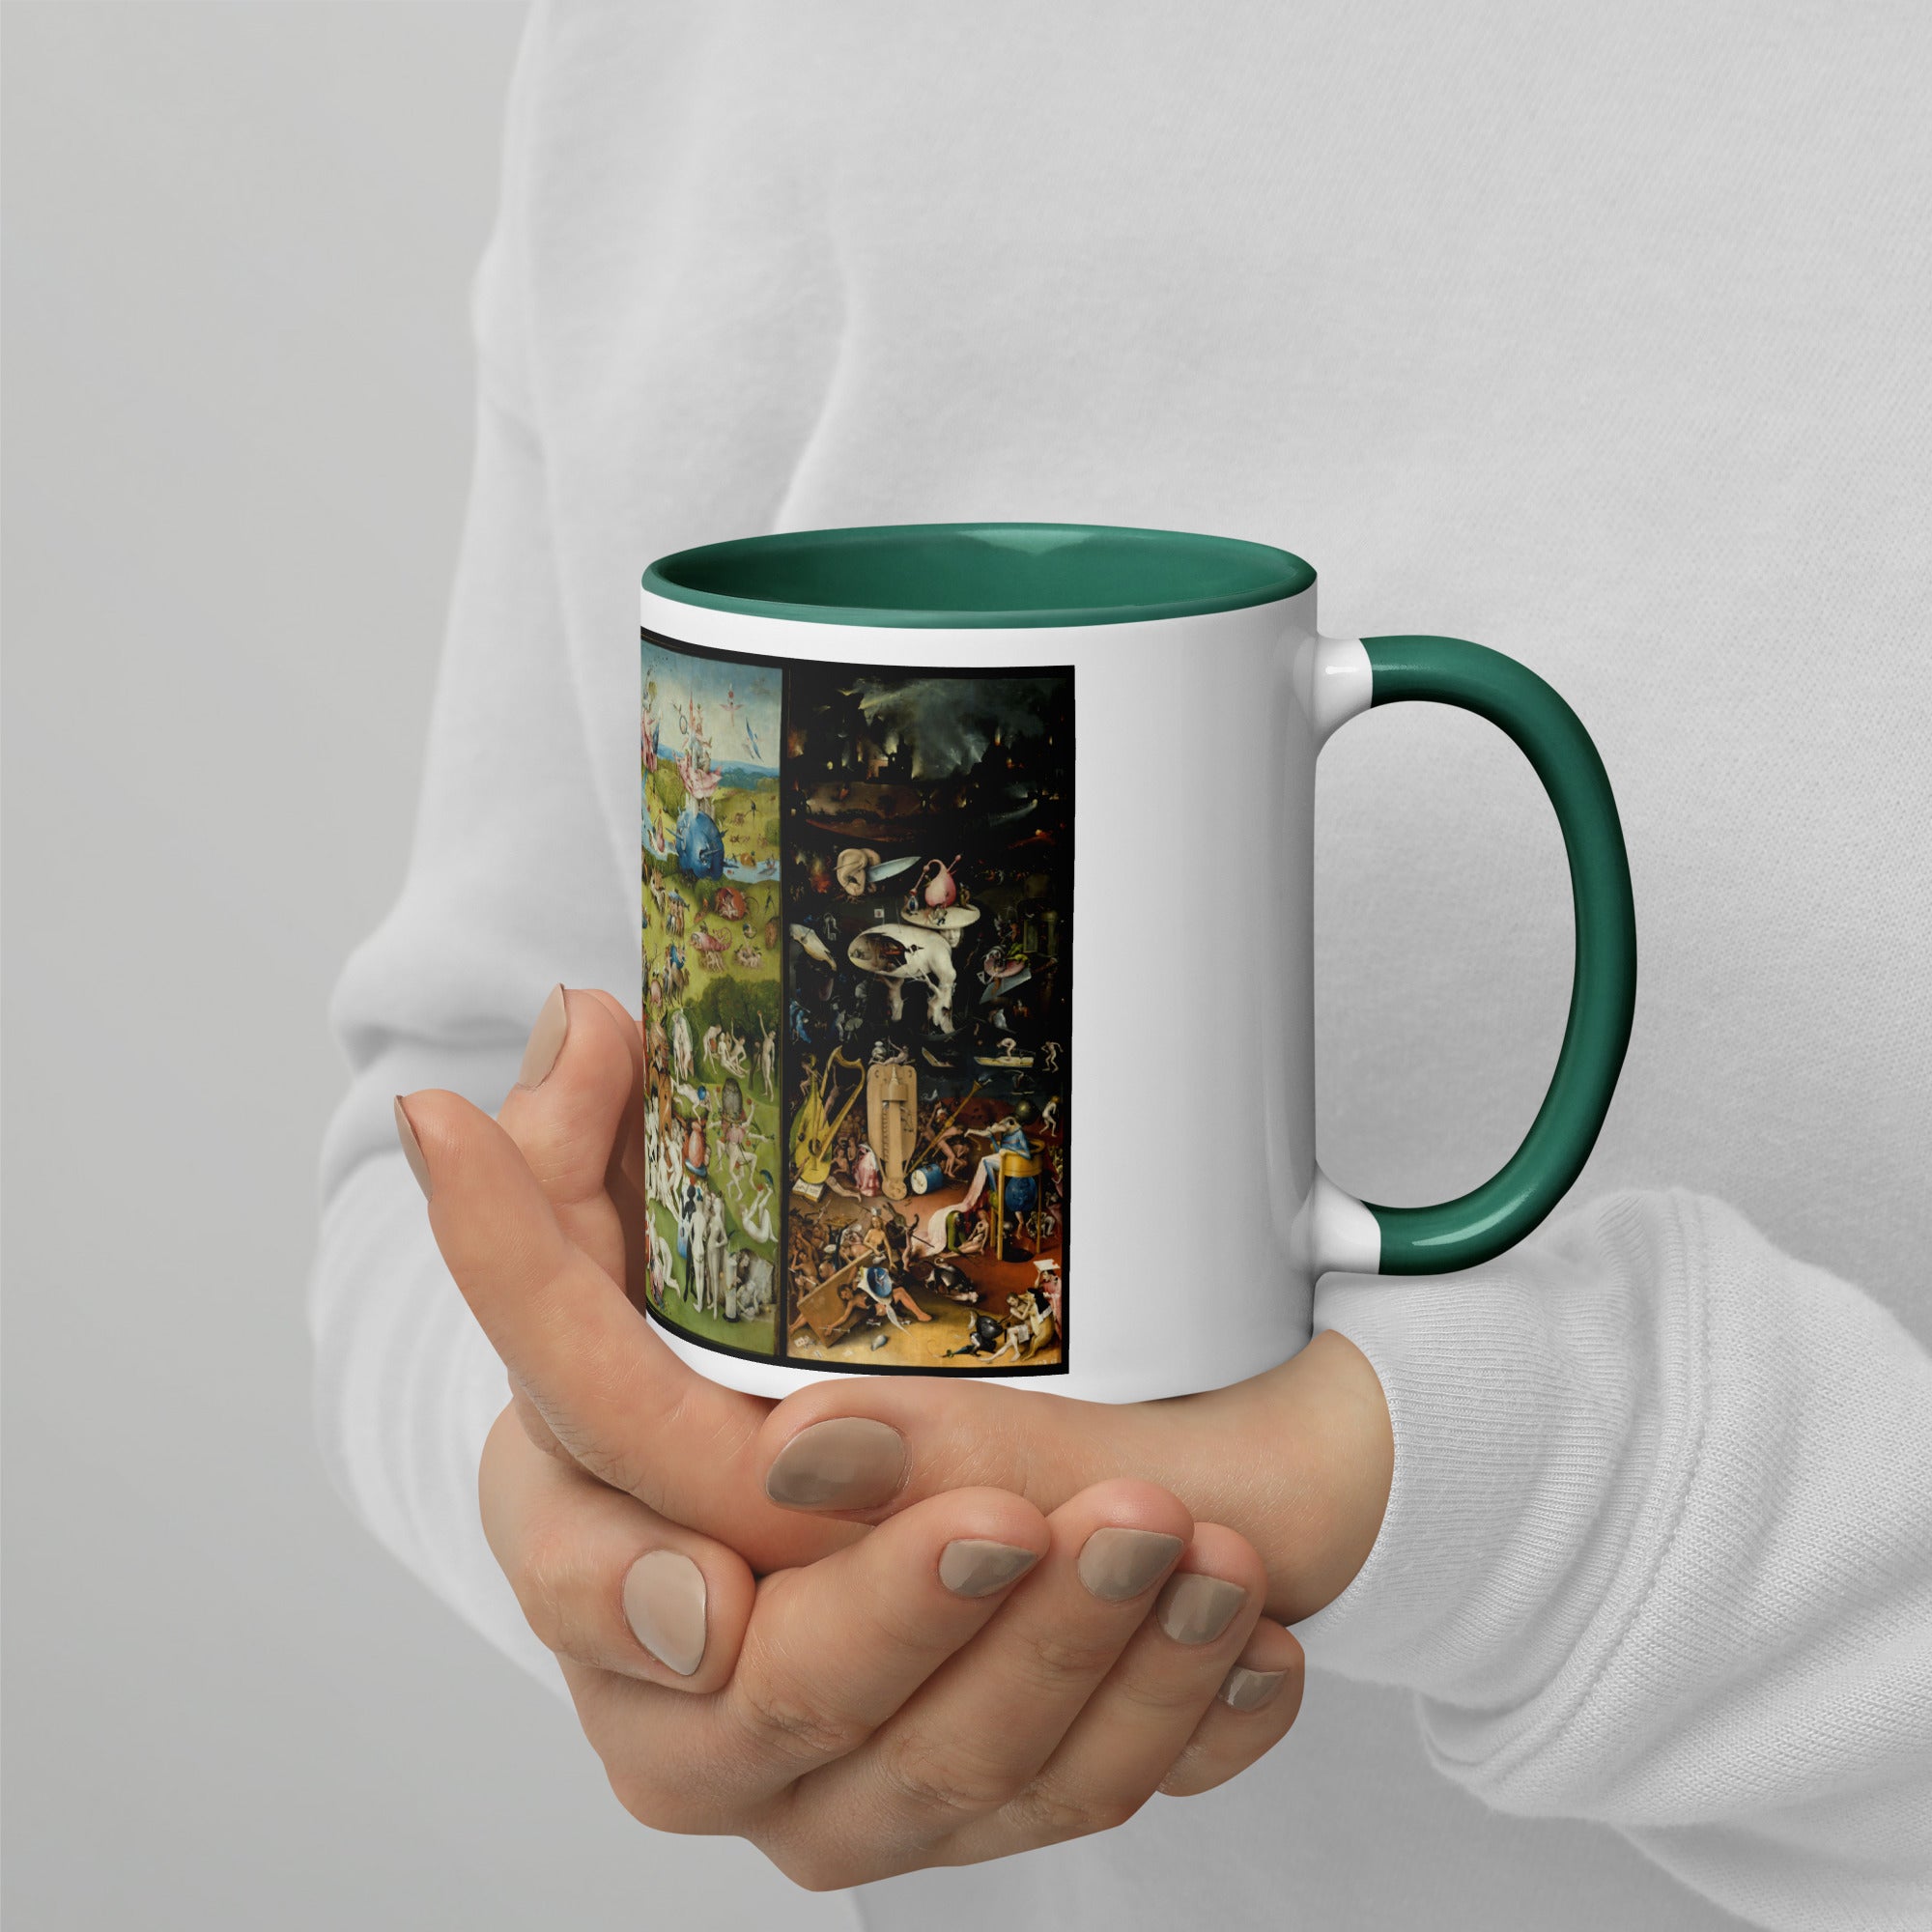 Hieronymus Bosch 'The Garden of Earthly Delights' Famous Painting Ceramic Mug | Premium Art Mug